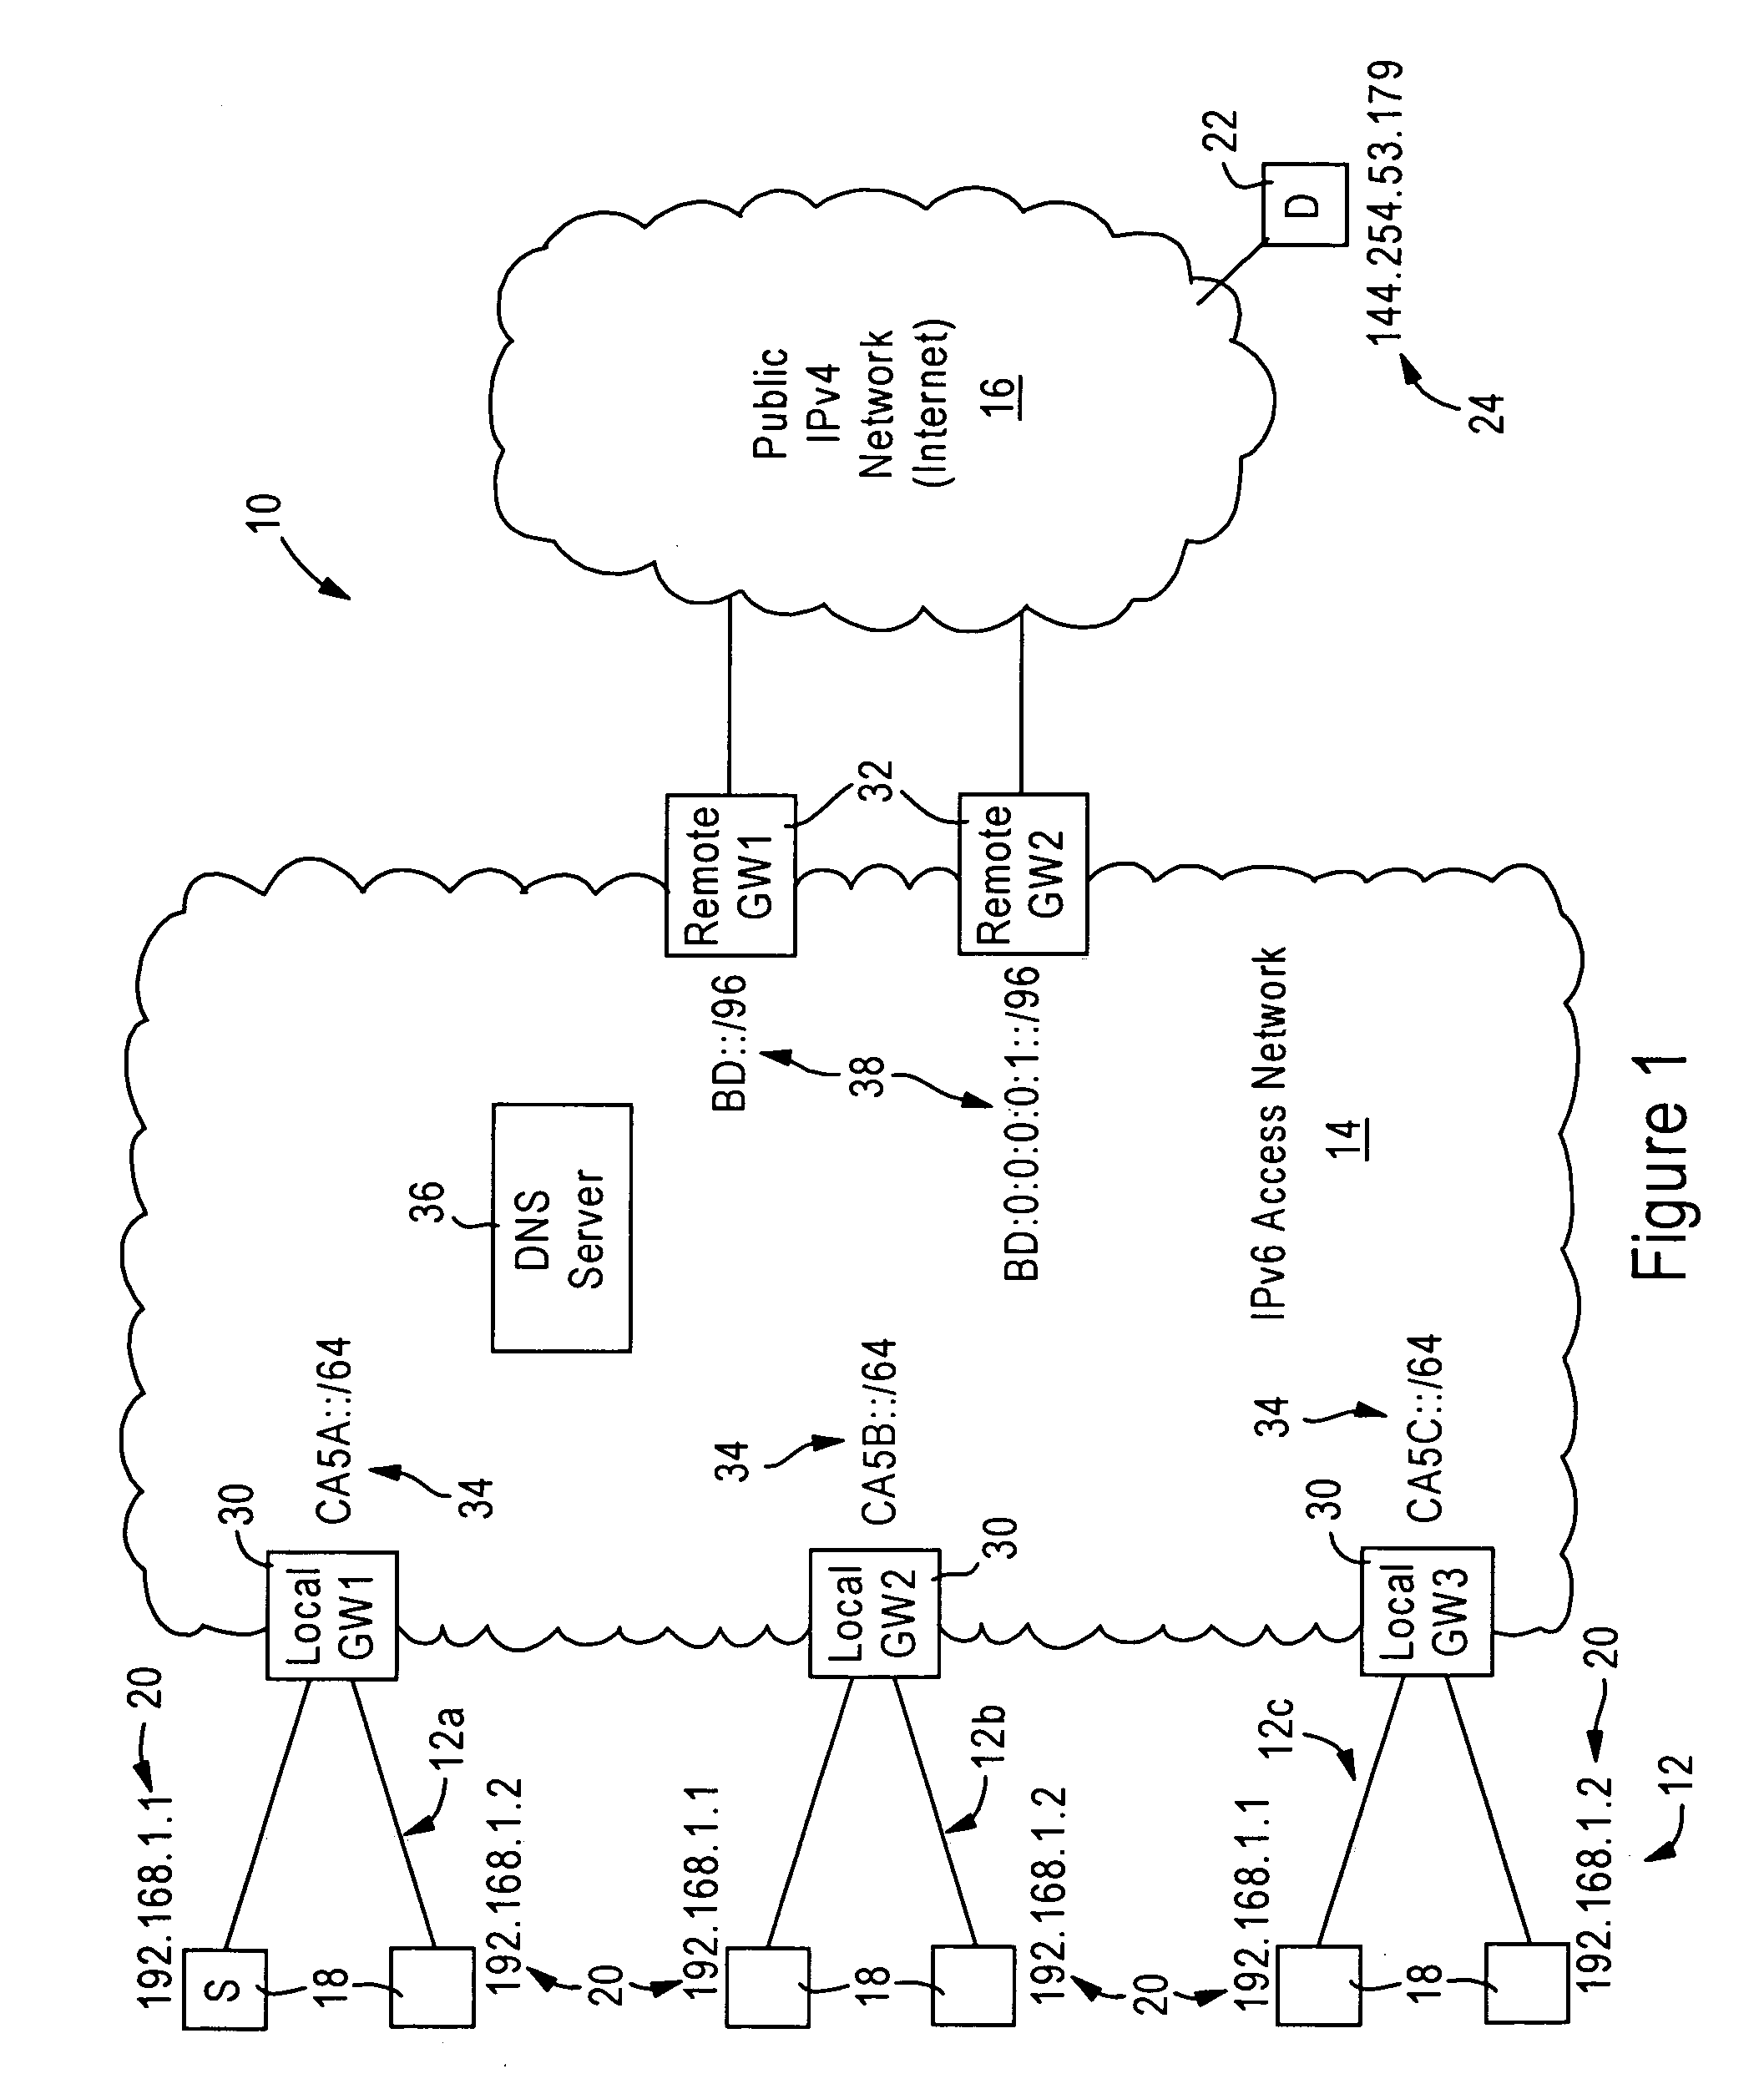 Arrangement for reaching IPv4 public network nodes by a node in a IPv4 private network via an IPv6 access network